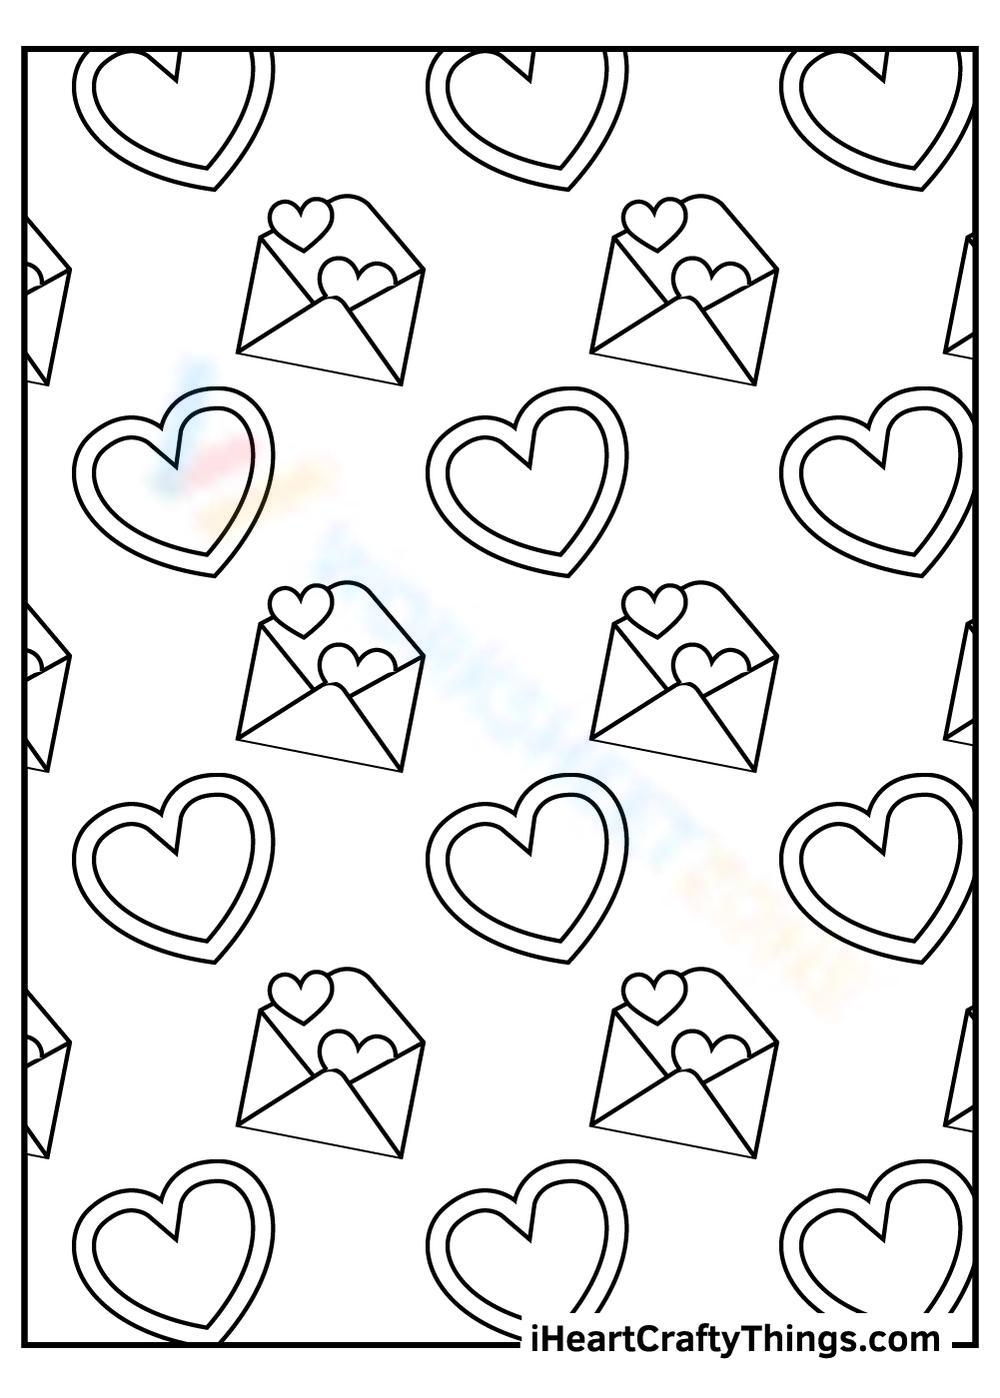 Love letter envelopes and heart shapes worksheet